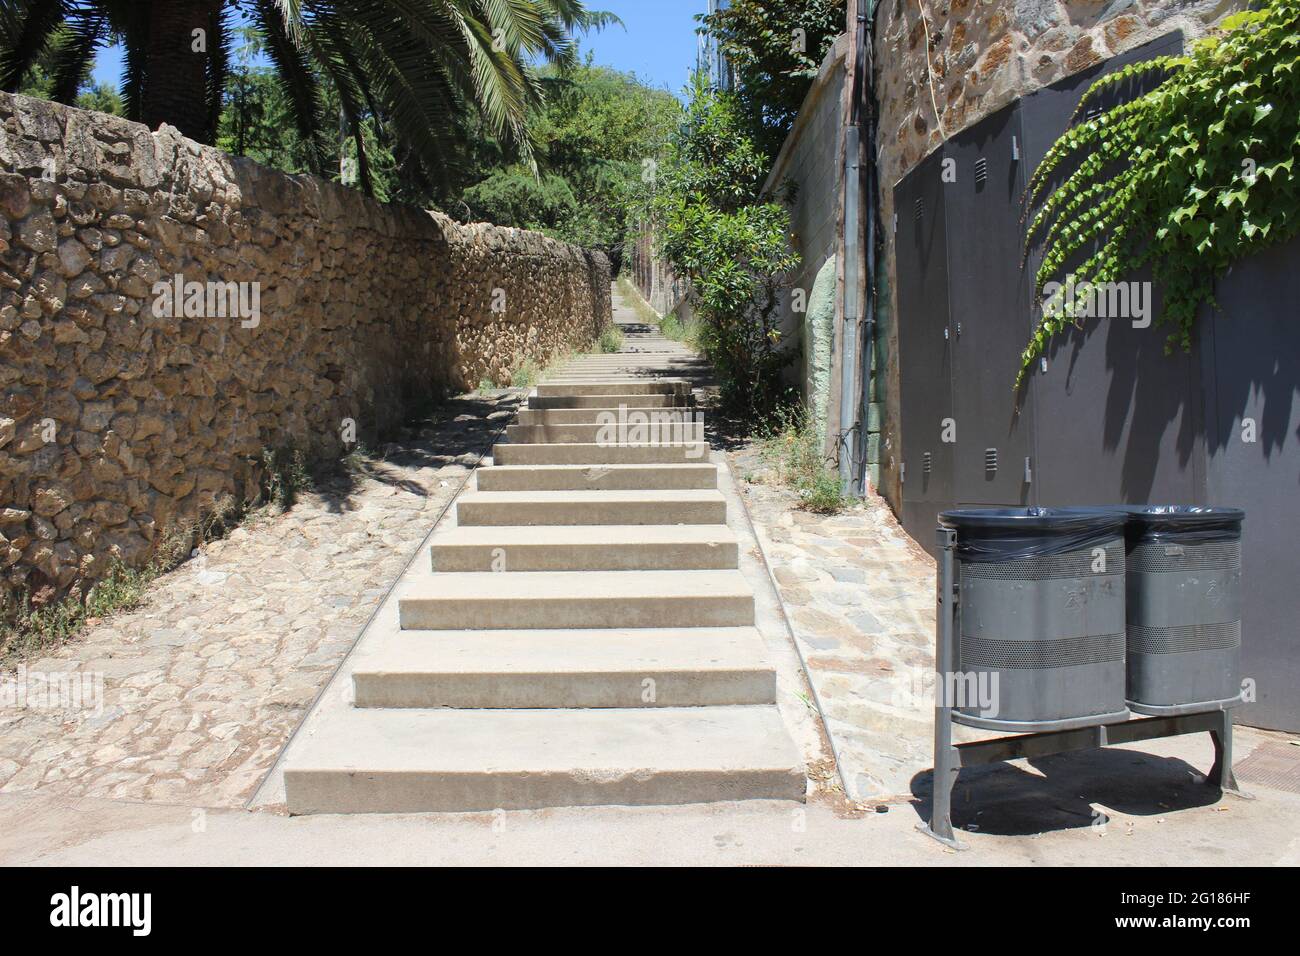 Park Güell stairs in Barcelona, Spain. Let's go! Stock Photo